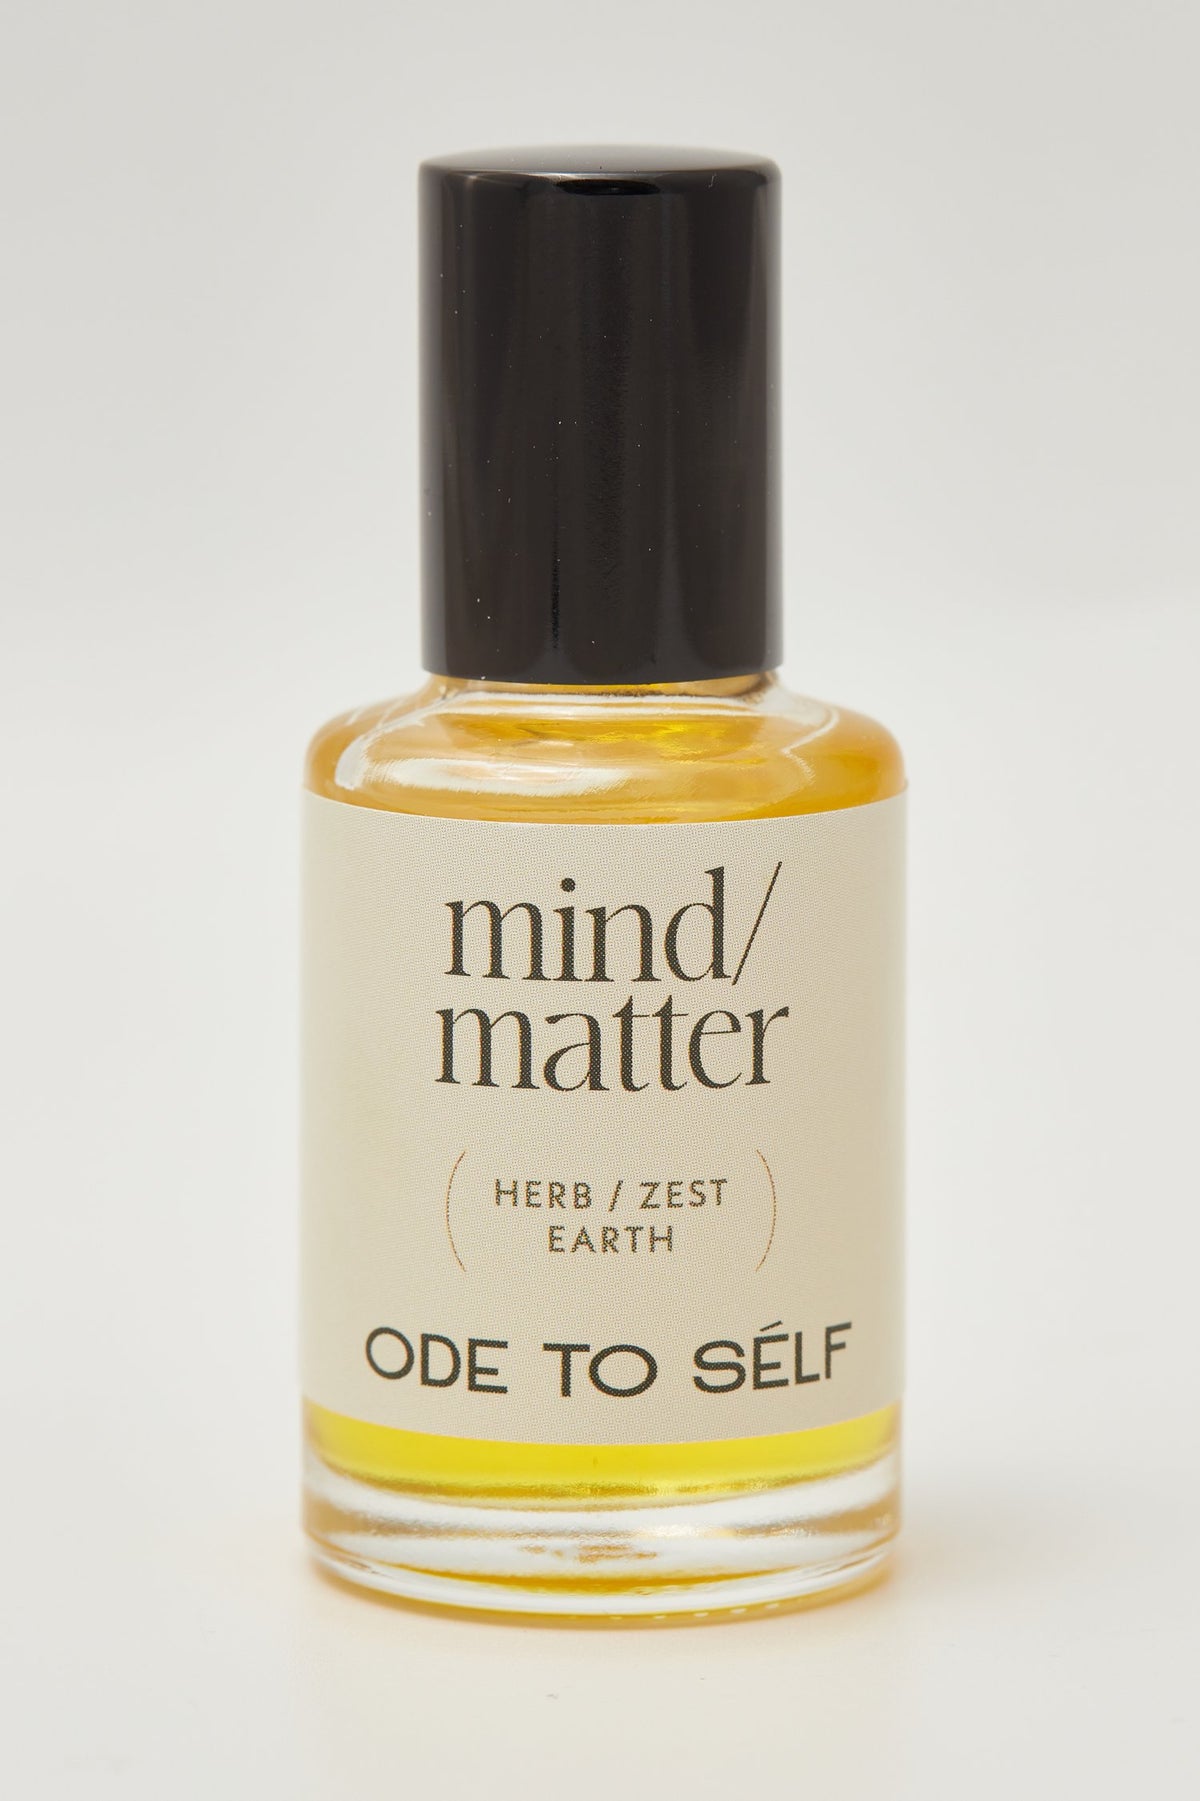 MIND/MATTER Perfume Oil